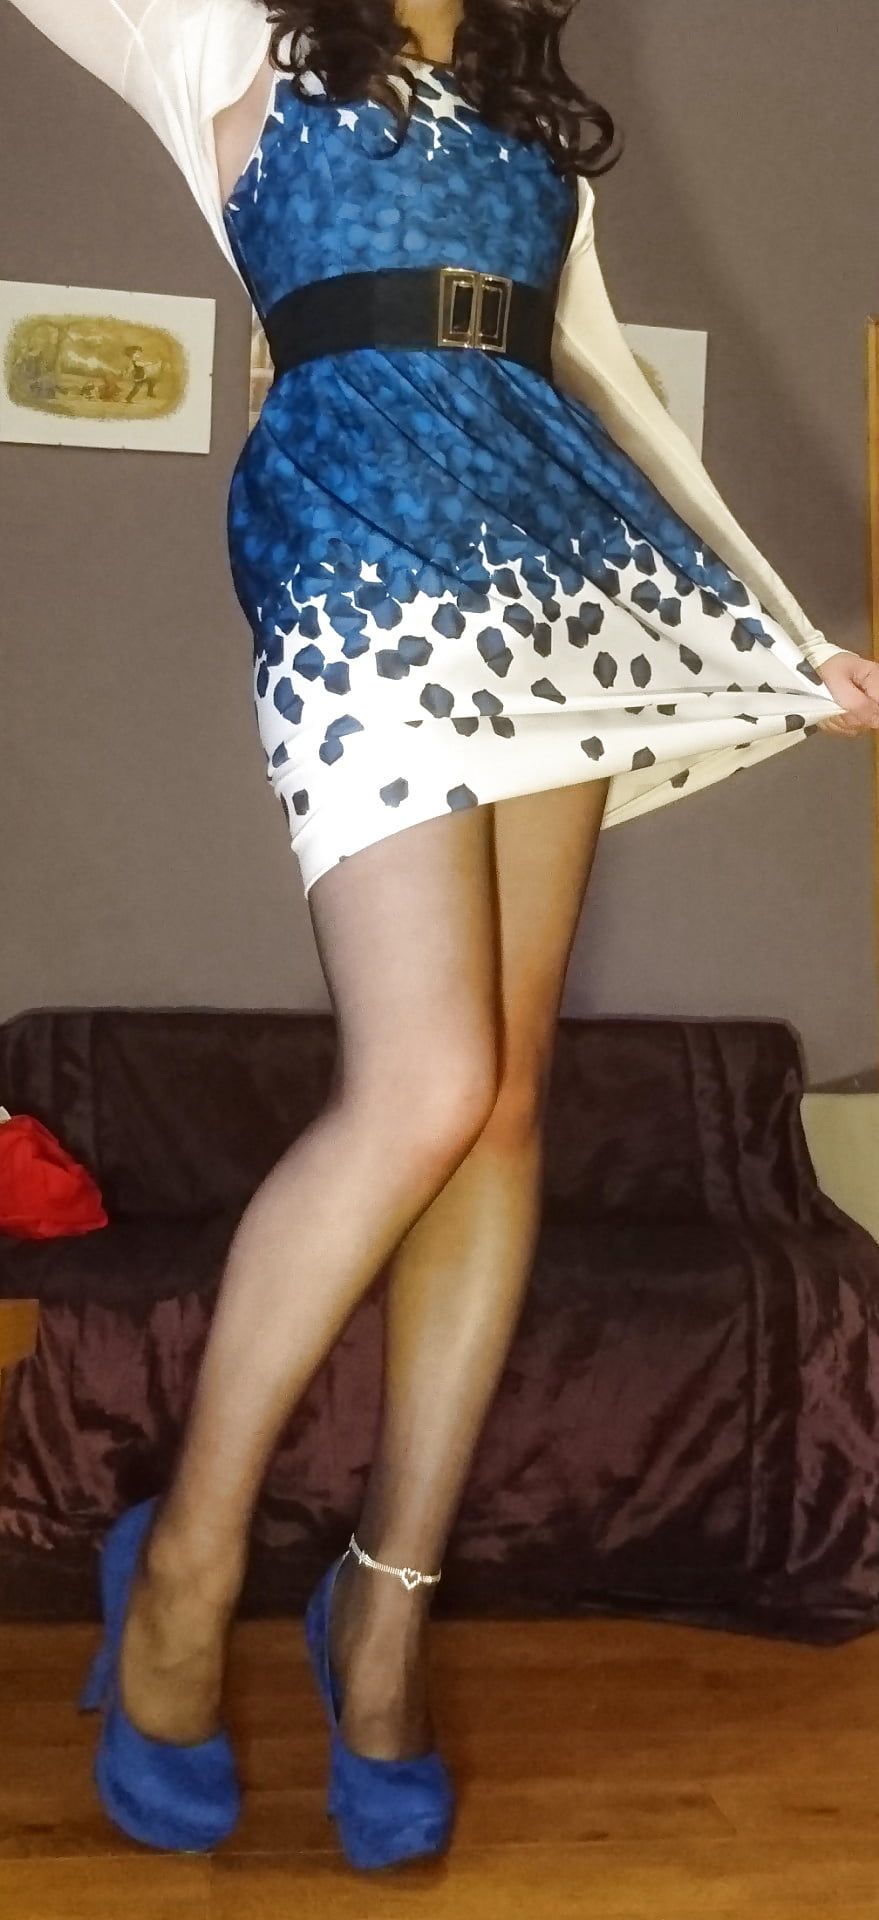 Marie crossdresser blue dress and sheer pantyhose #3